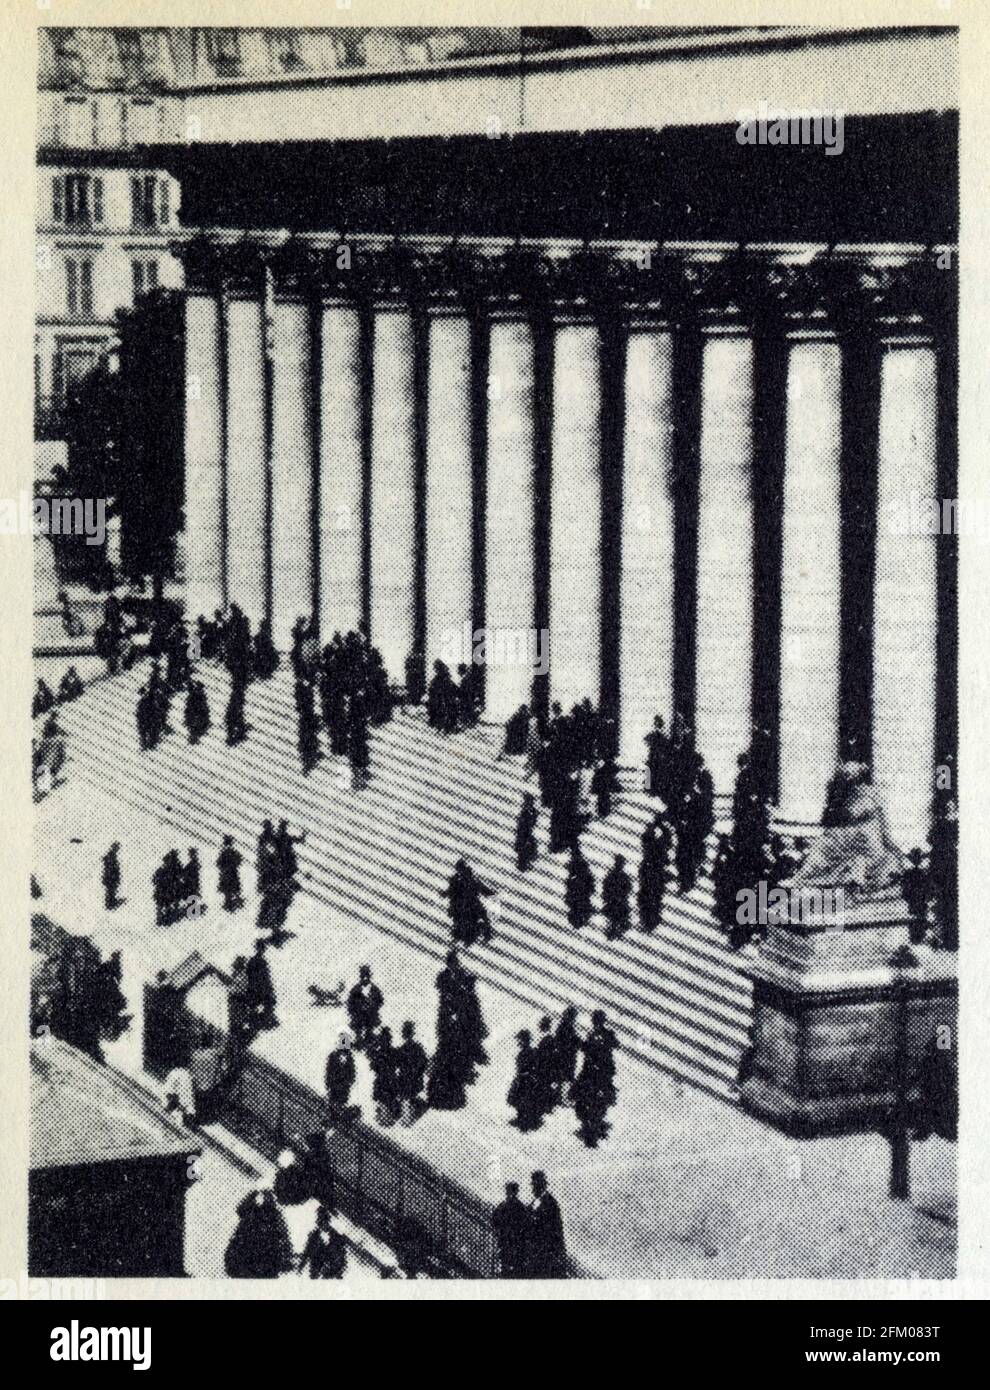 La Bourse vers 1880,photographie anonyme Stock Photo